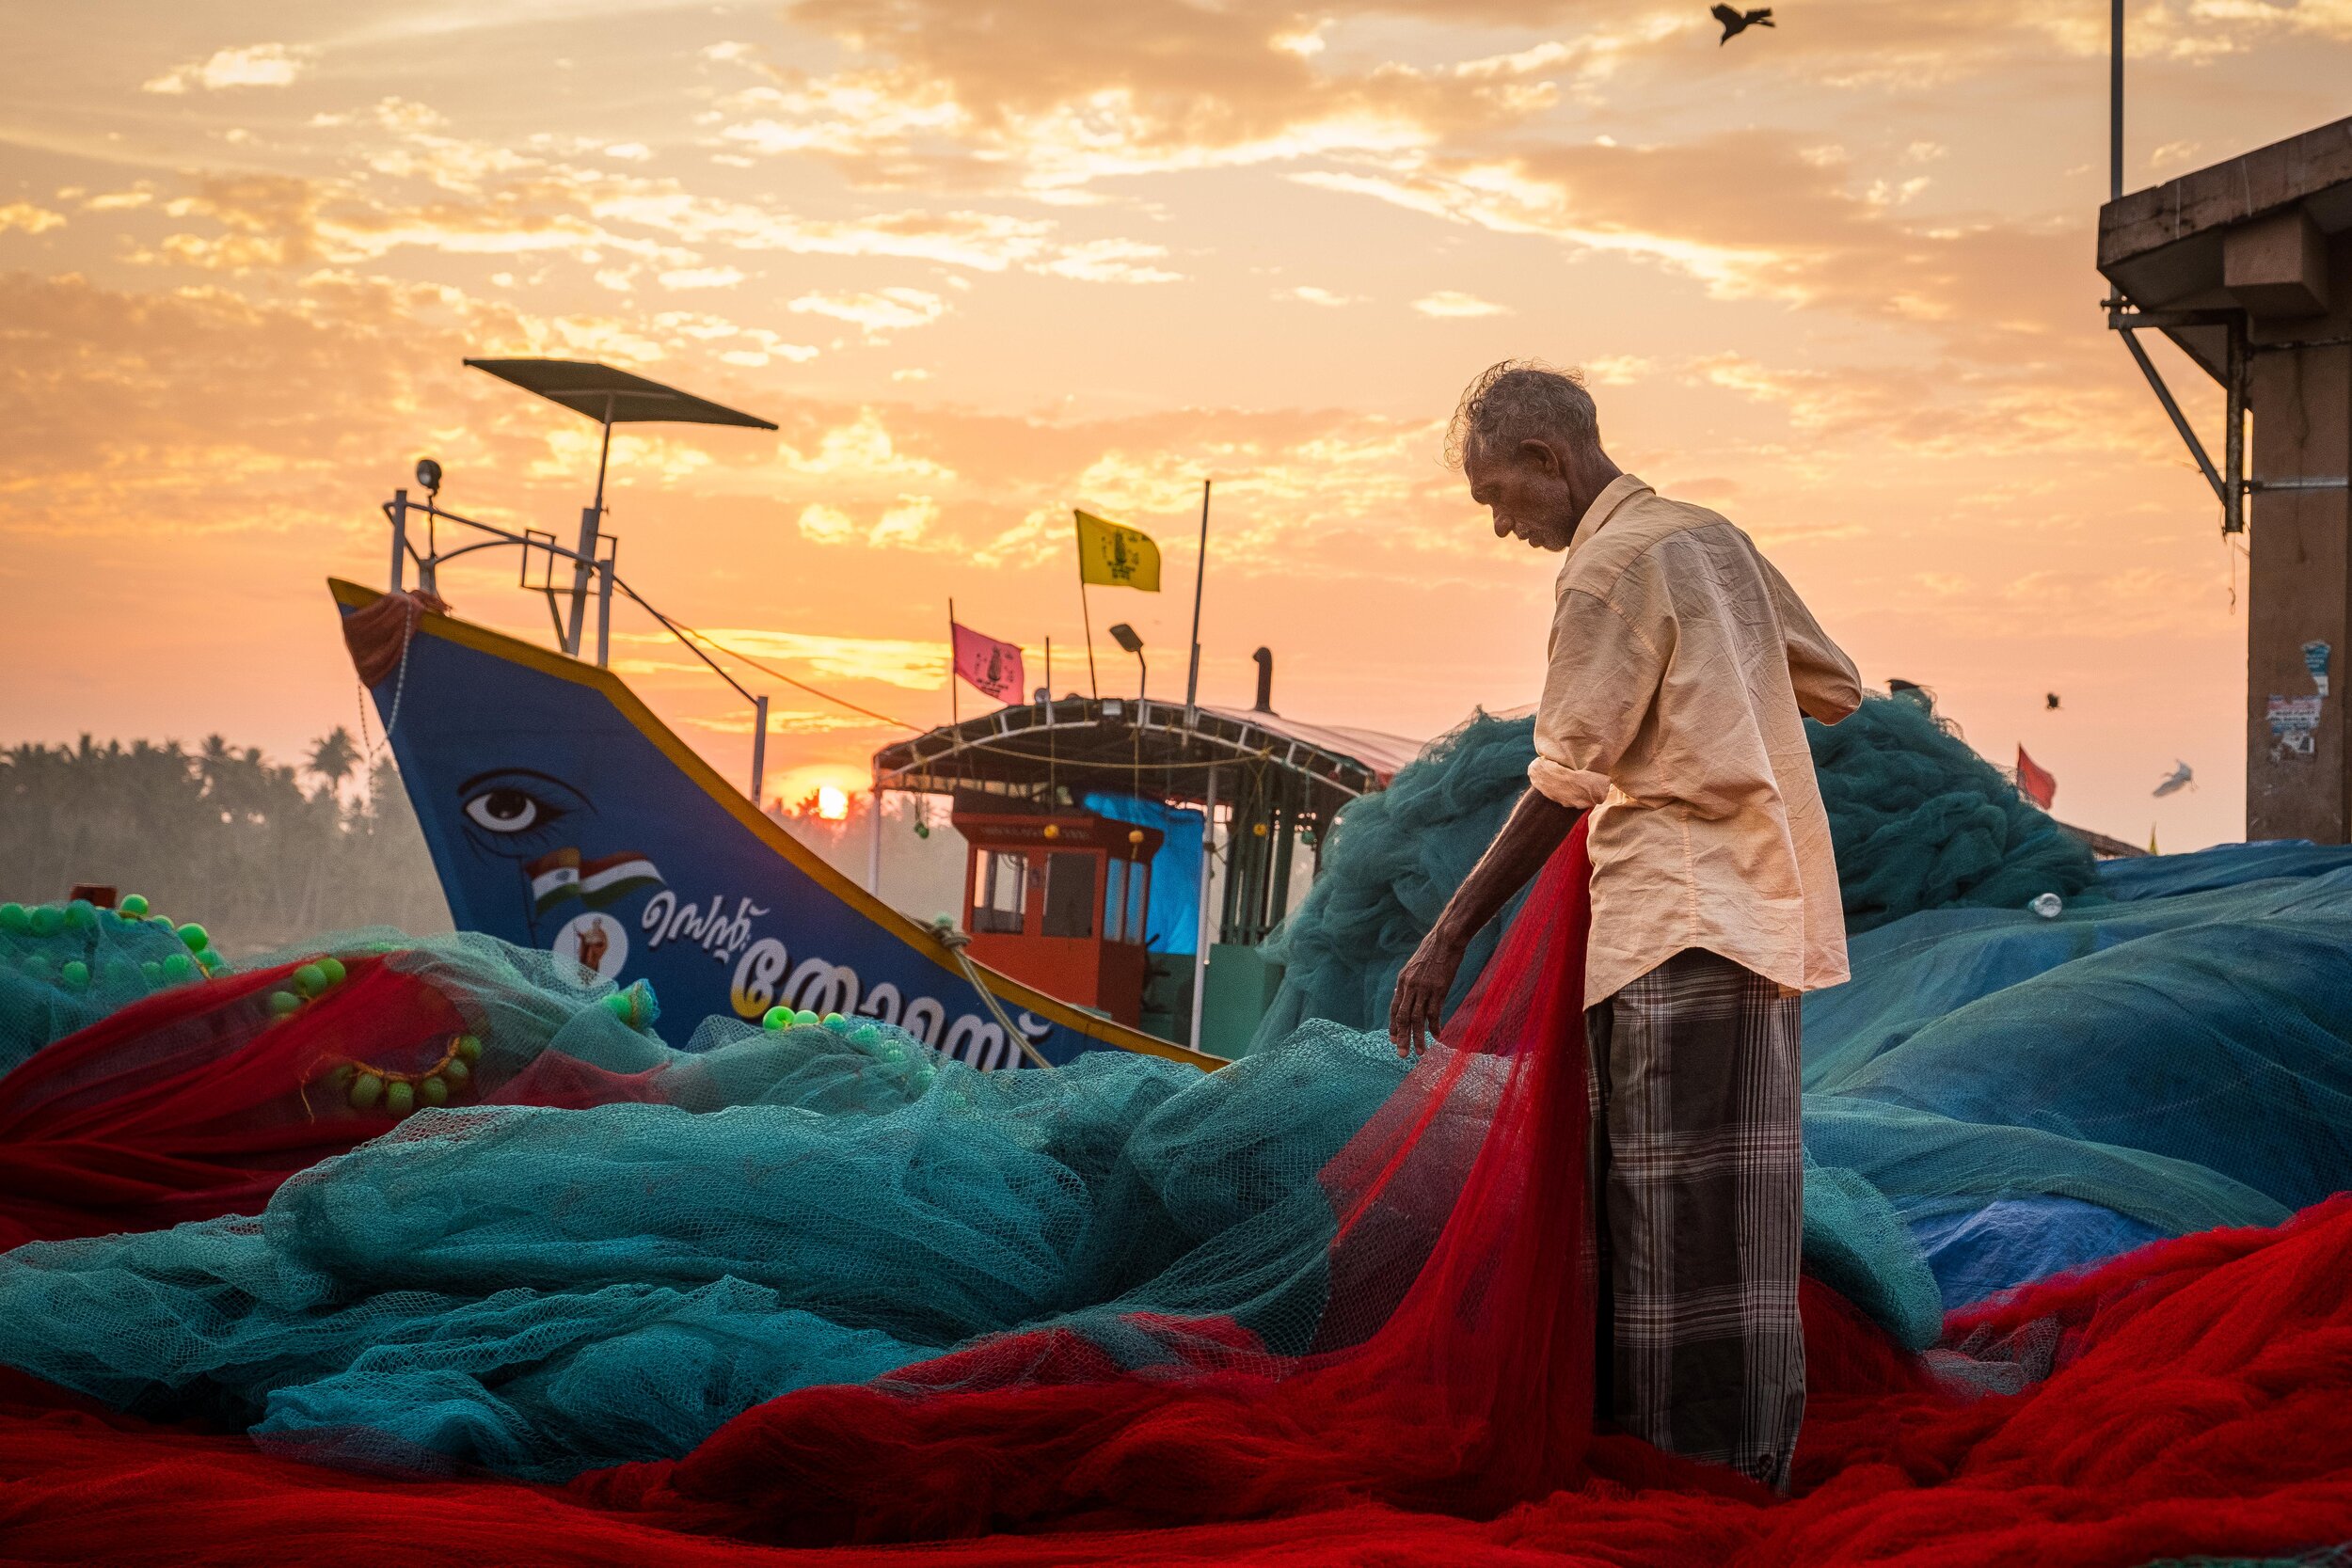  Fisherman setting up his fishing net at thazhampalli fish market in chirayinkeezhu, kerala, india. 